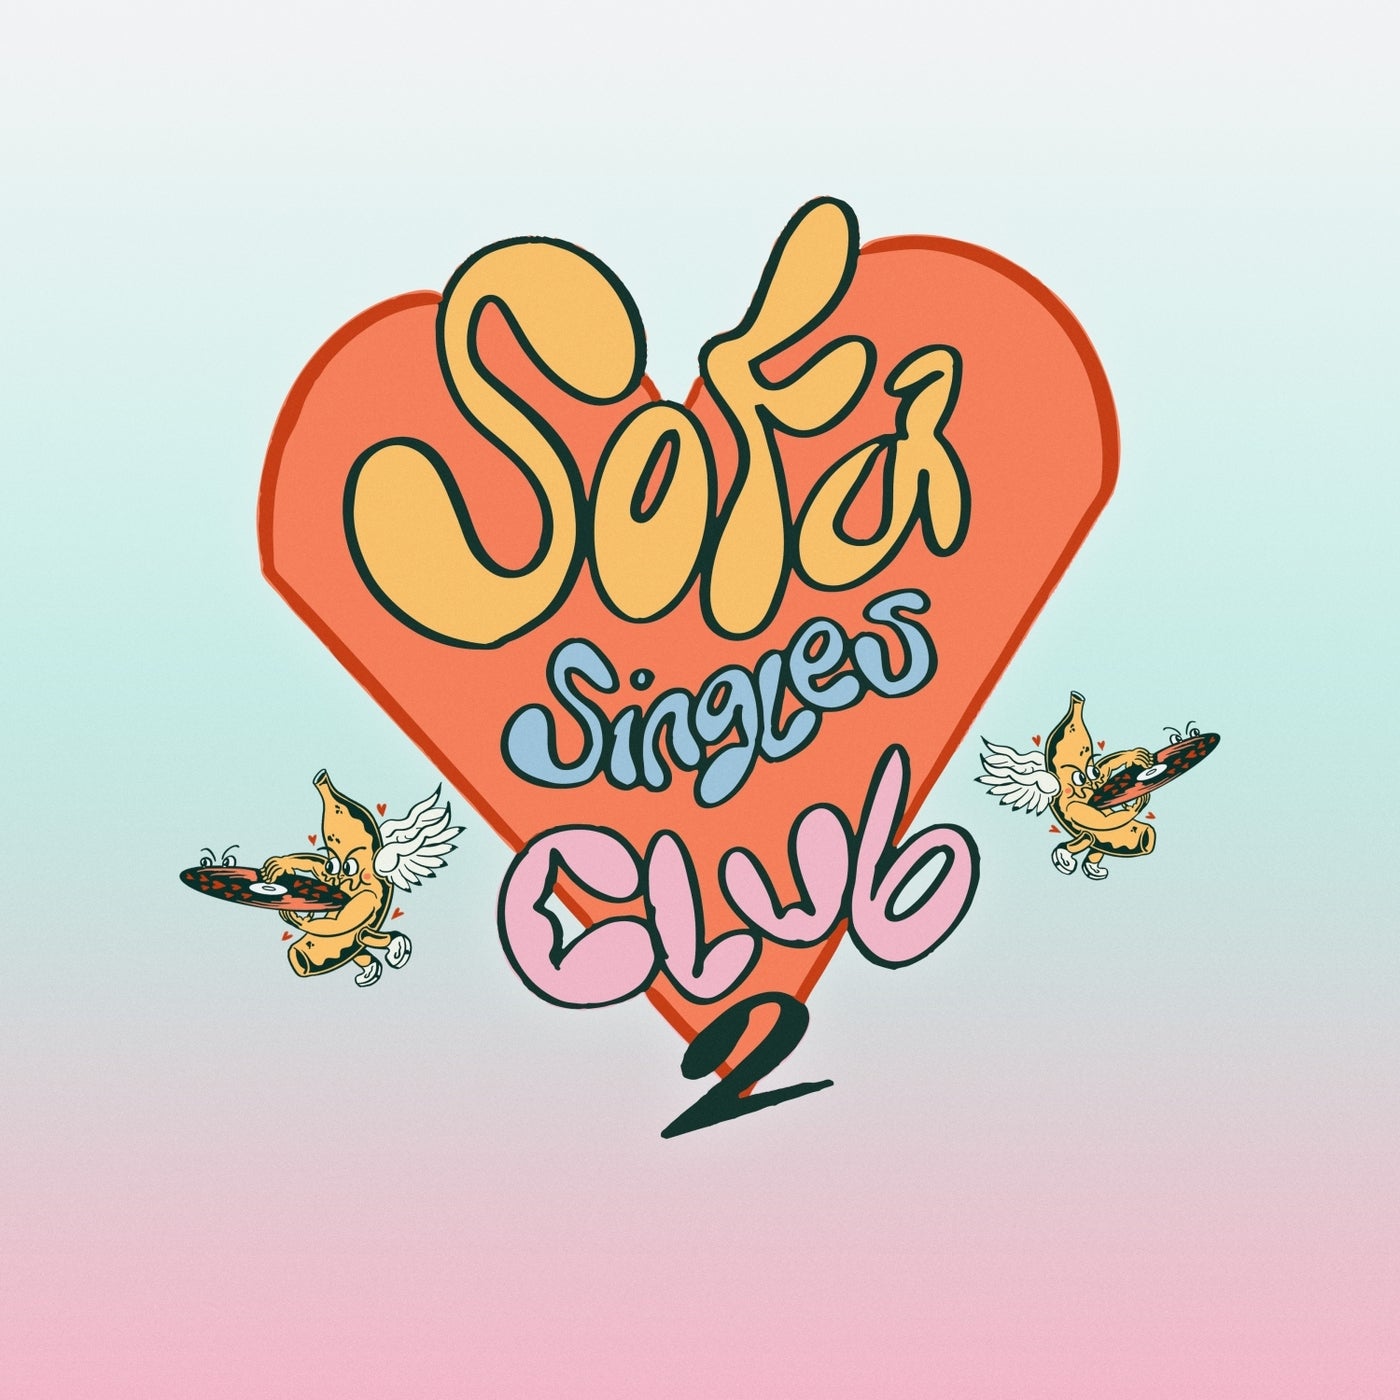 Sofa Singles Club - Episode 2